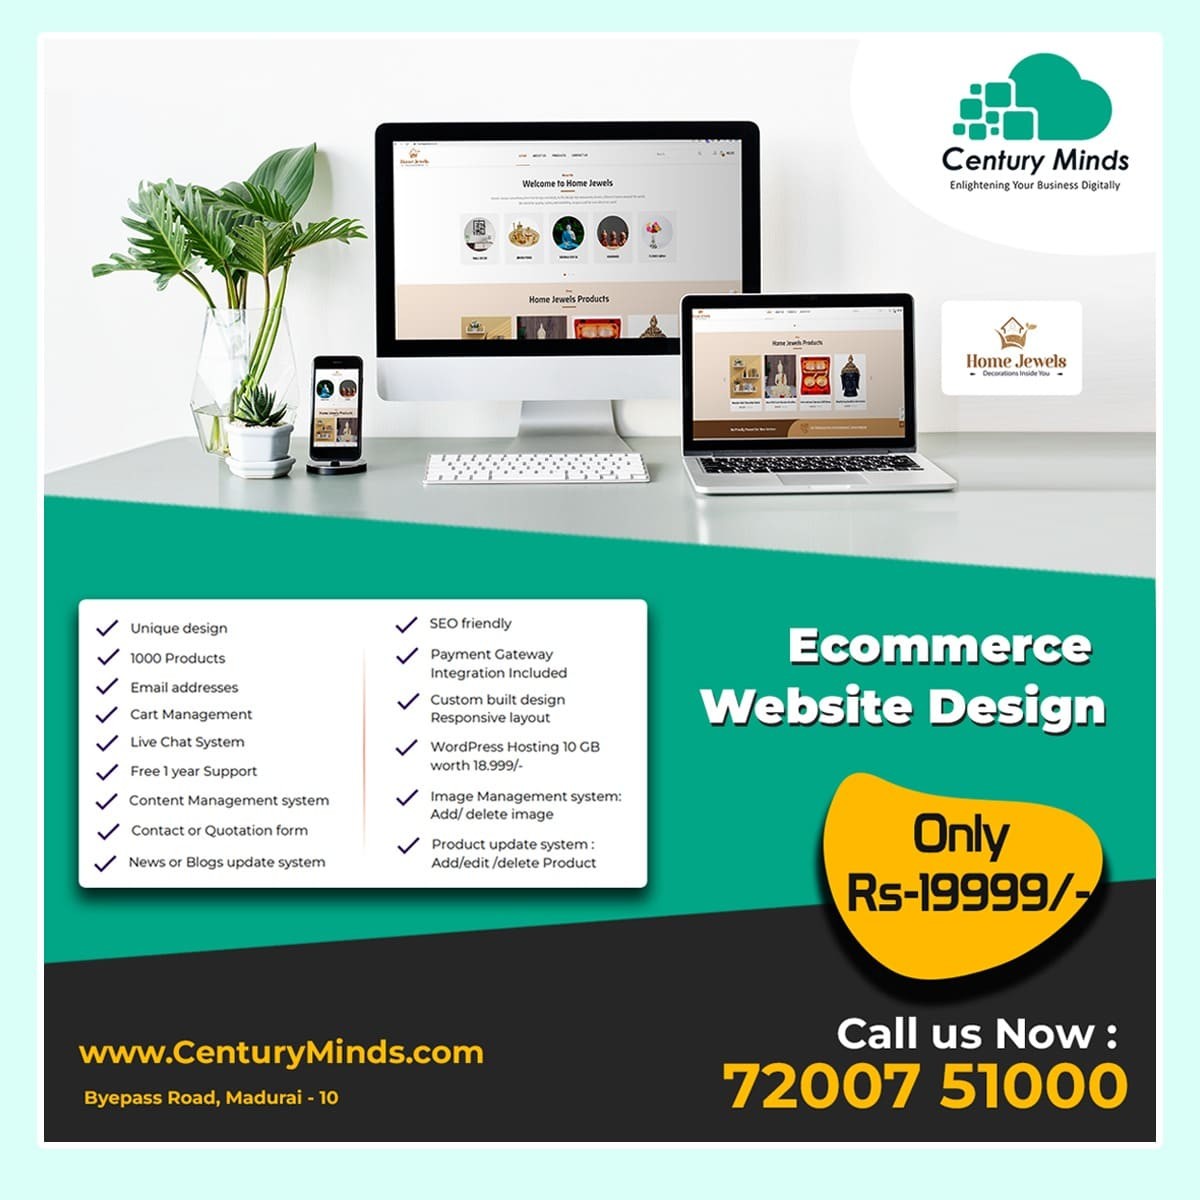 website design companies List in Dubai-image